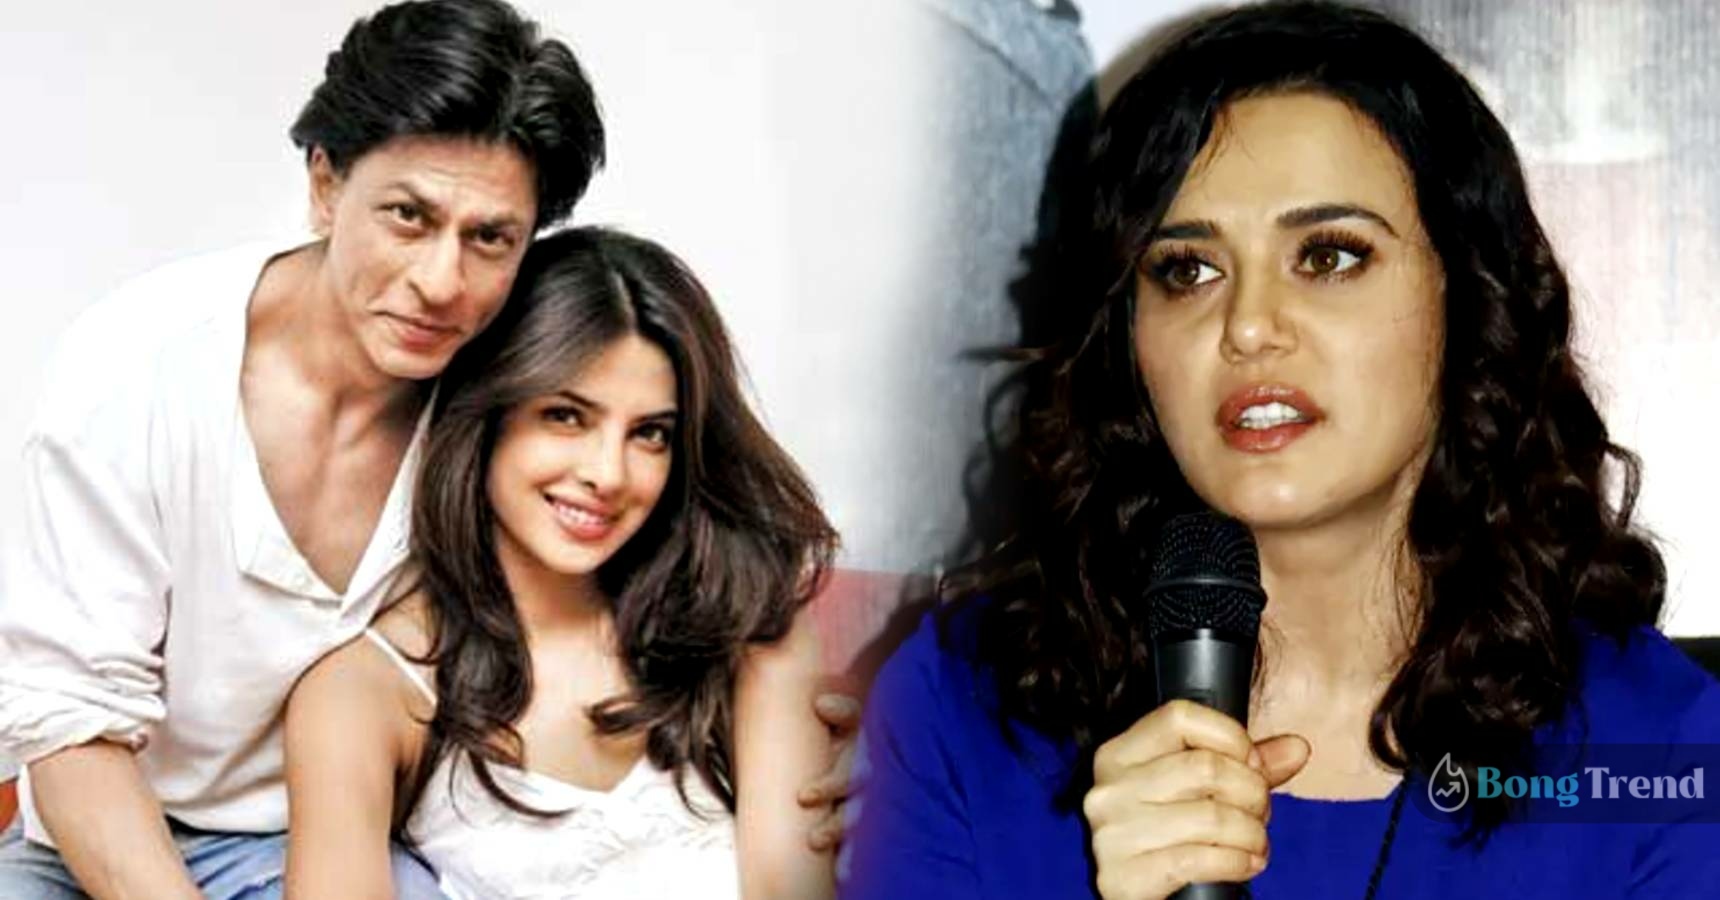 Preity Zinta once indirectly called Priyanka Chopra a ‘Home Breaker’, amid her affair rumours with Shah Rukh Khan